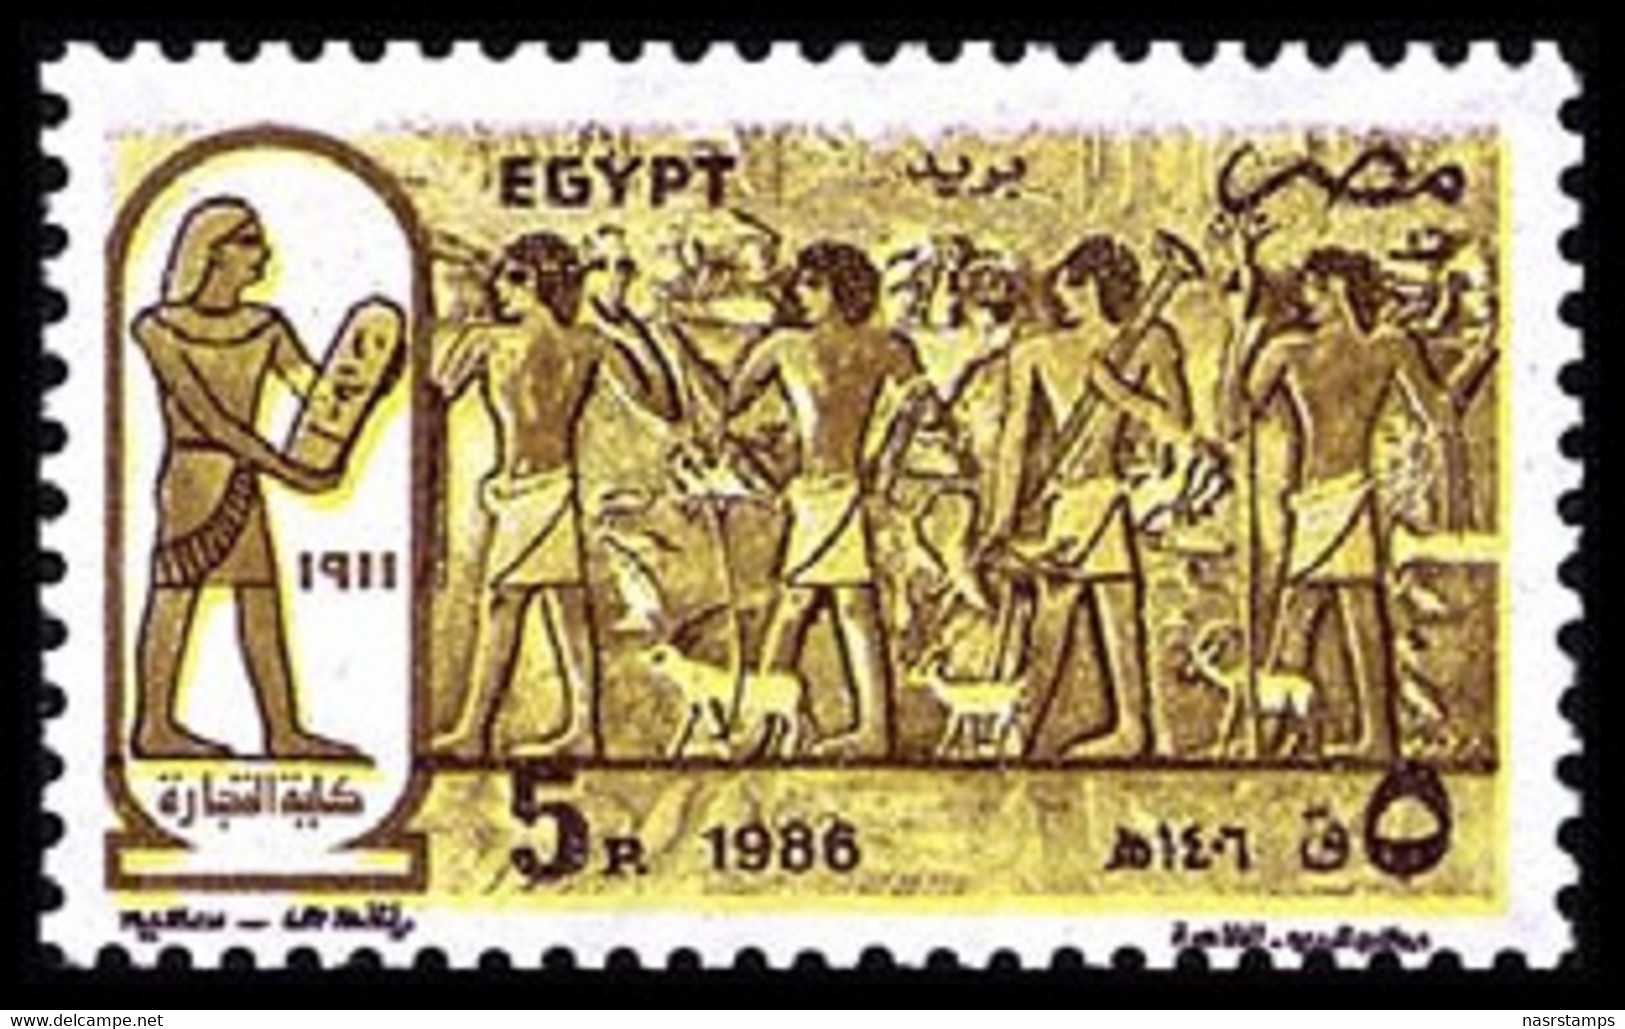 Egypt - 1986 - Egyptology - ( Faculty Of Commerce, Cairo Univ., 75th Anniv. - Btah Hotteb's Tomb At Saqqara ) - Ungebraucht